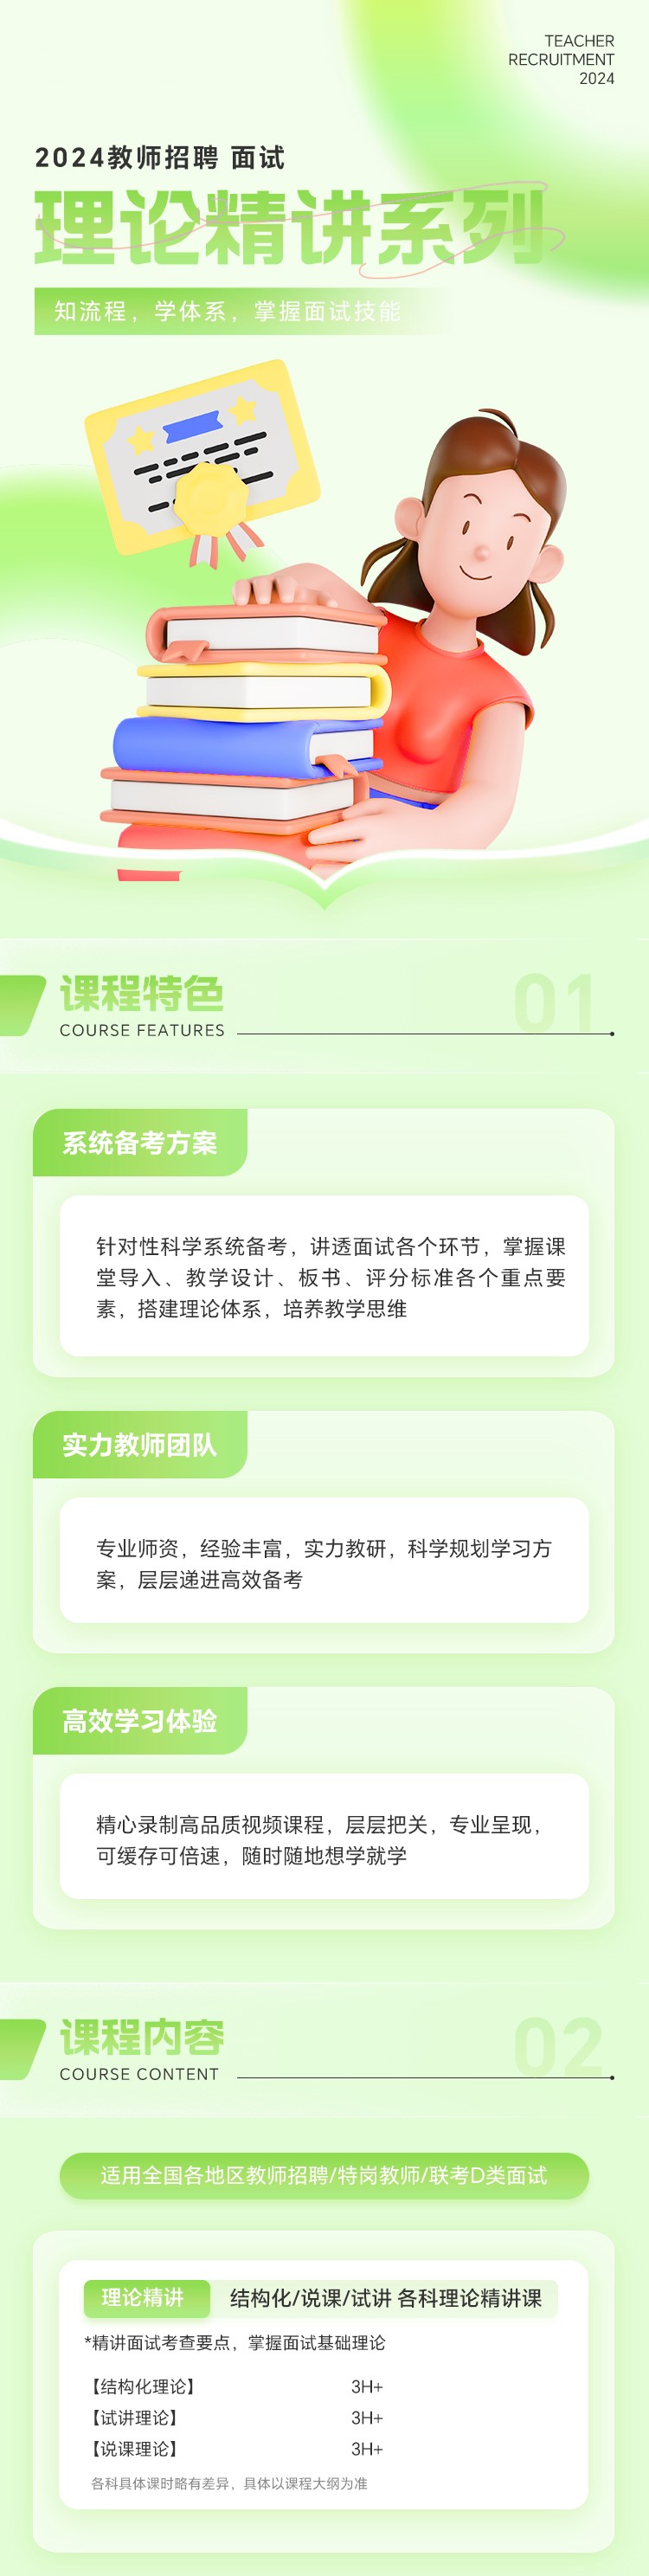 https://simg01.gaodunwangxiao.com/uploadfiles/product-center/202404/23/1b715_20240423111553.jpg